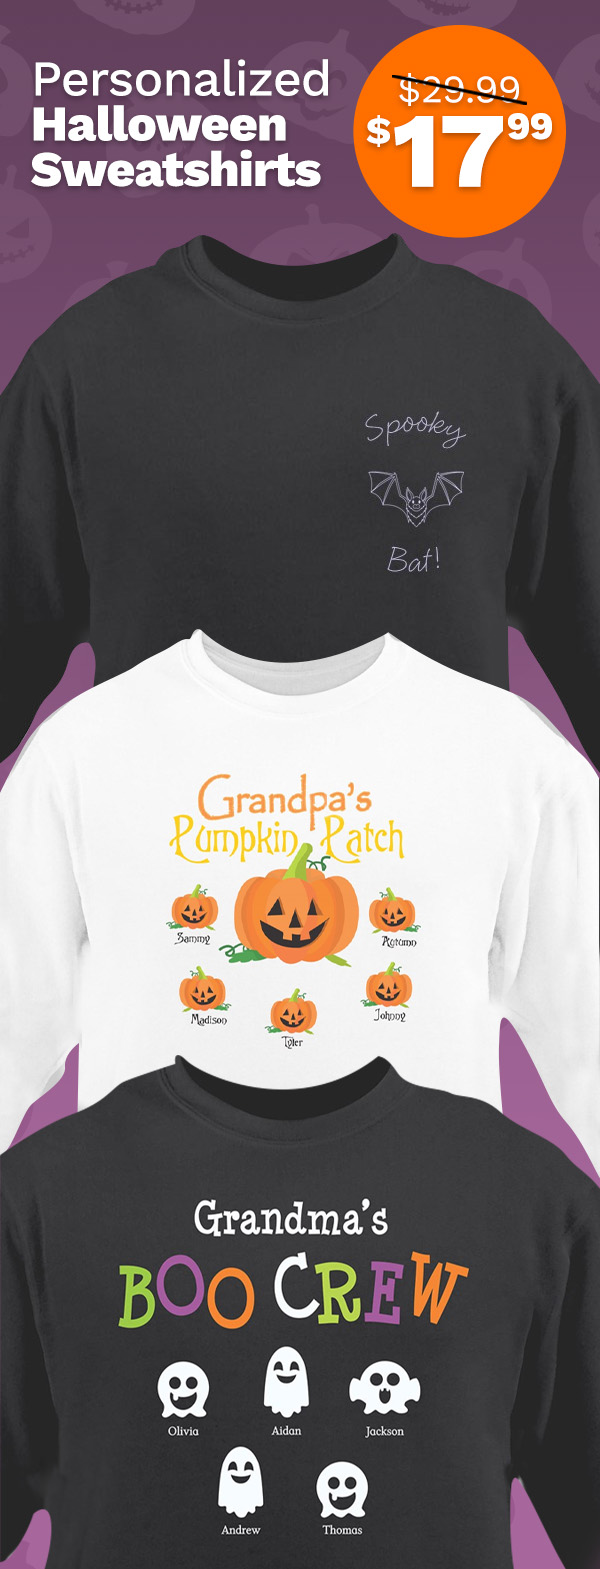 $17.99 Personalized Halloween Sweatshirts With Code: SPOOKY17KR